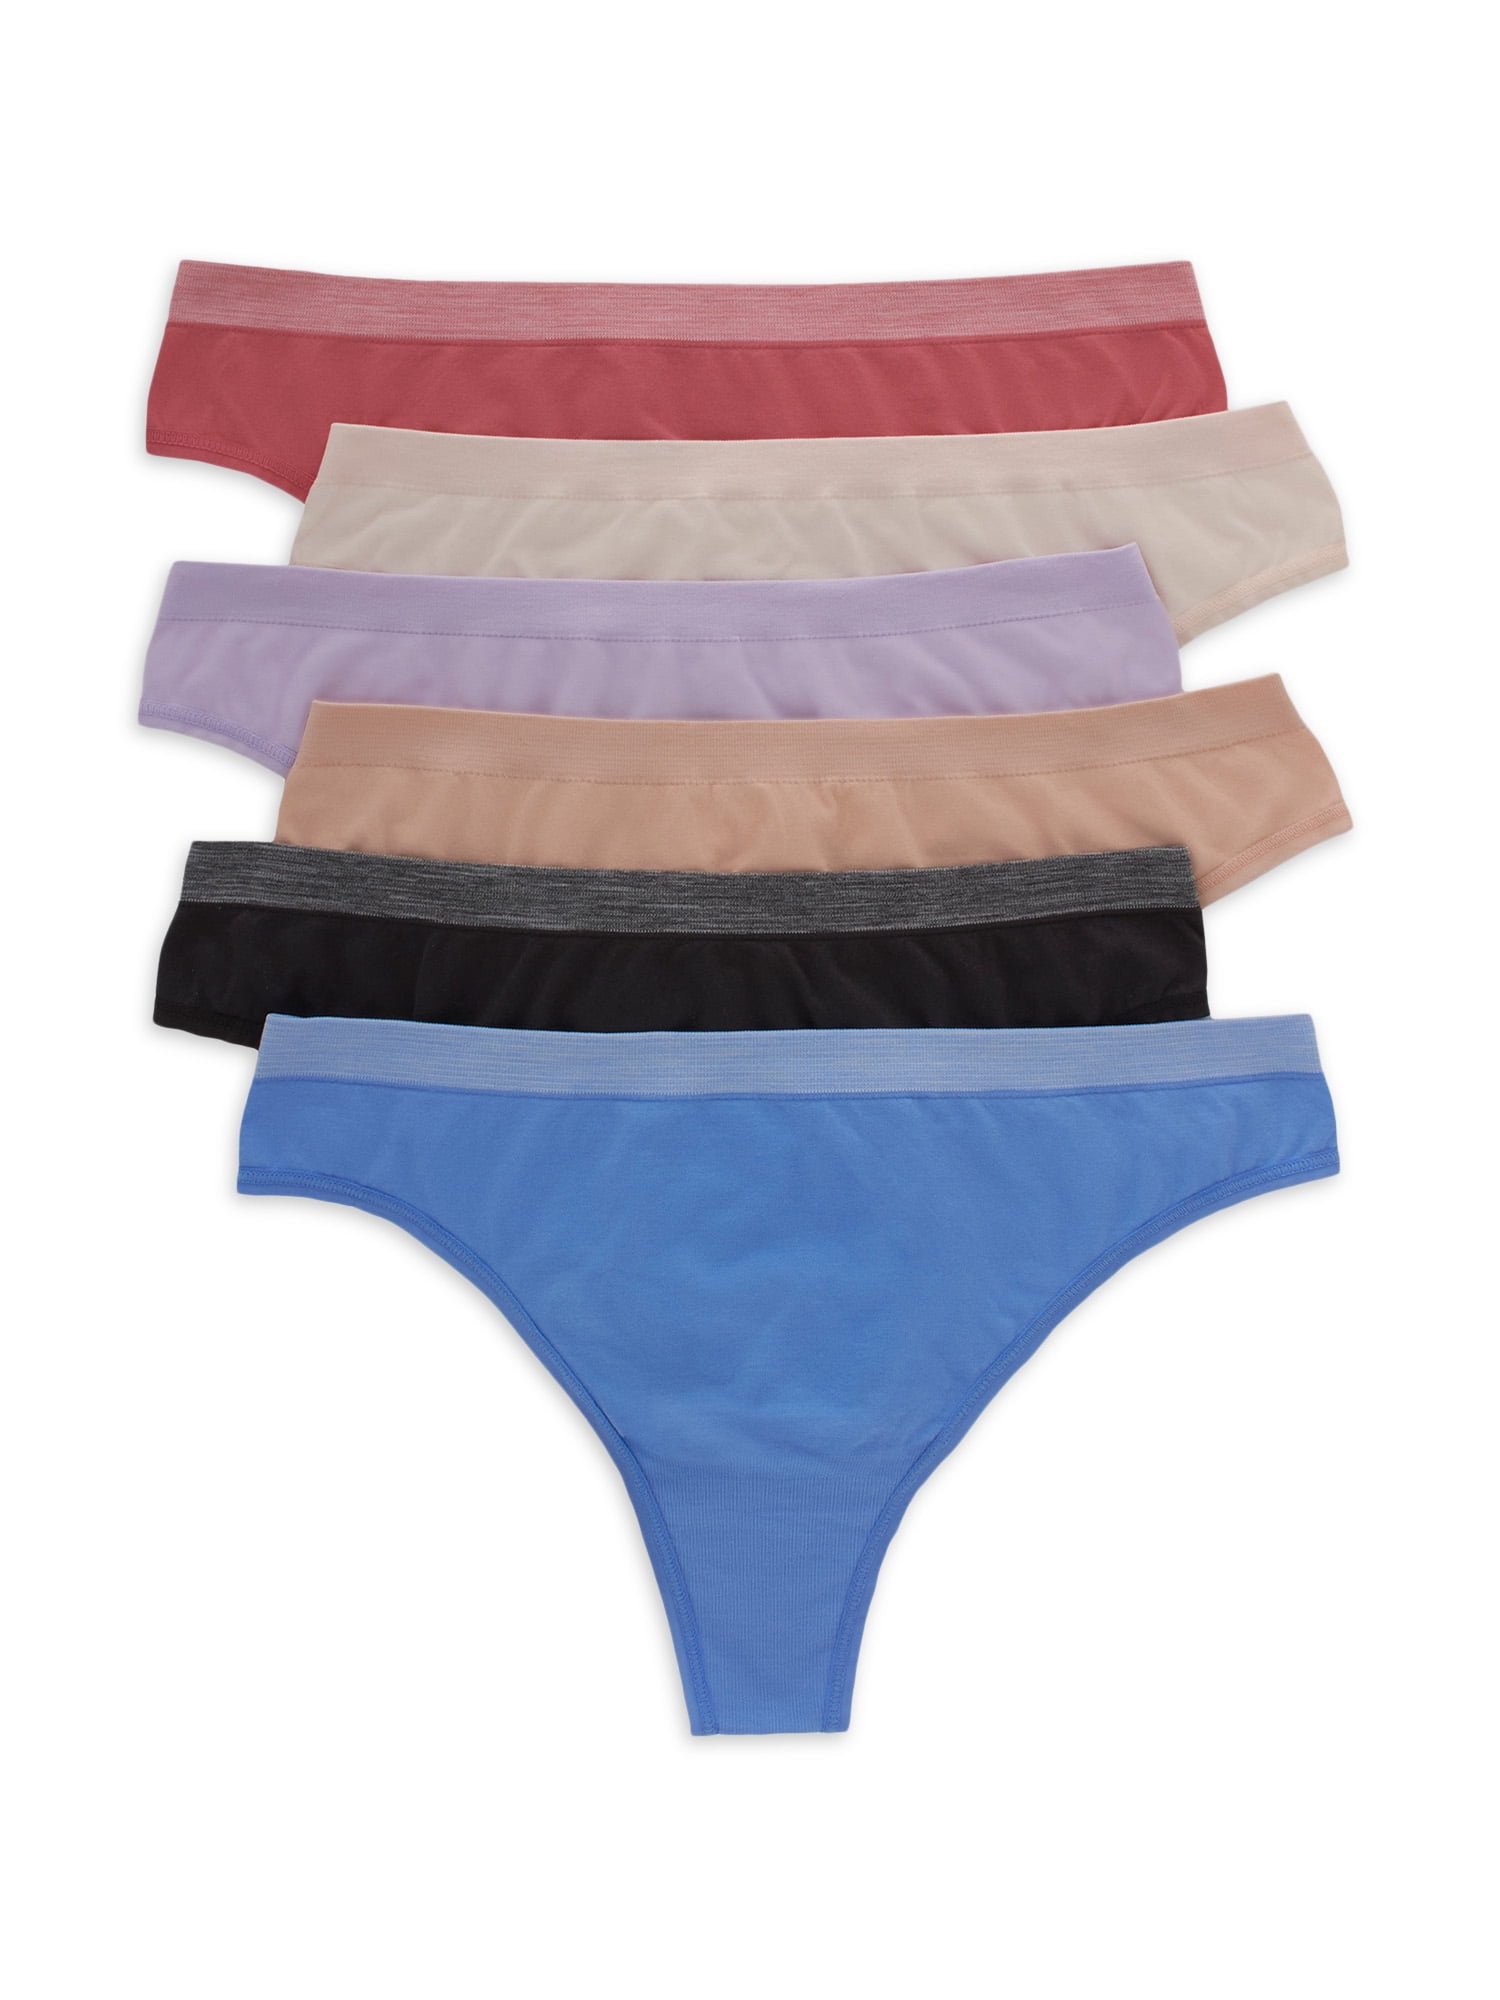 5 PACK Hanes X-Temp Girls Assorted Underwear Panties Multicolor